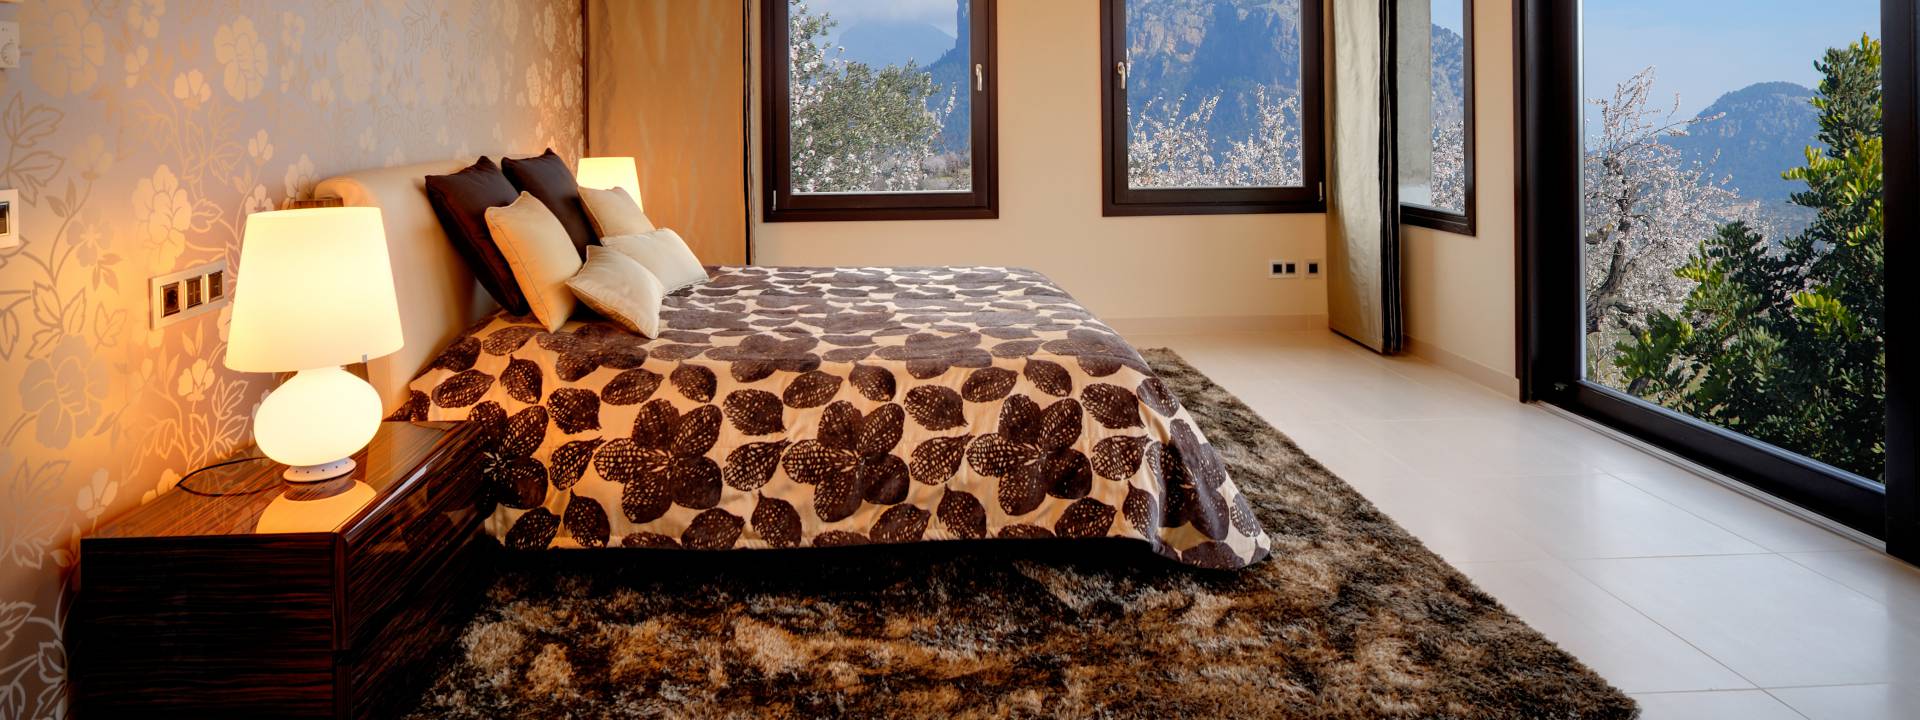 MOdern villa Mallorca bedroom interior design